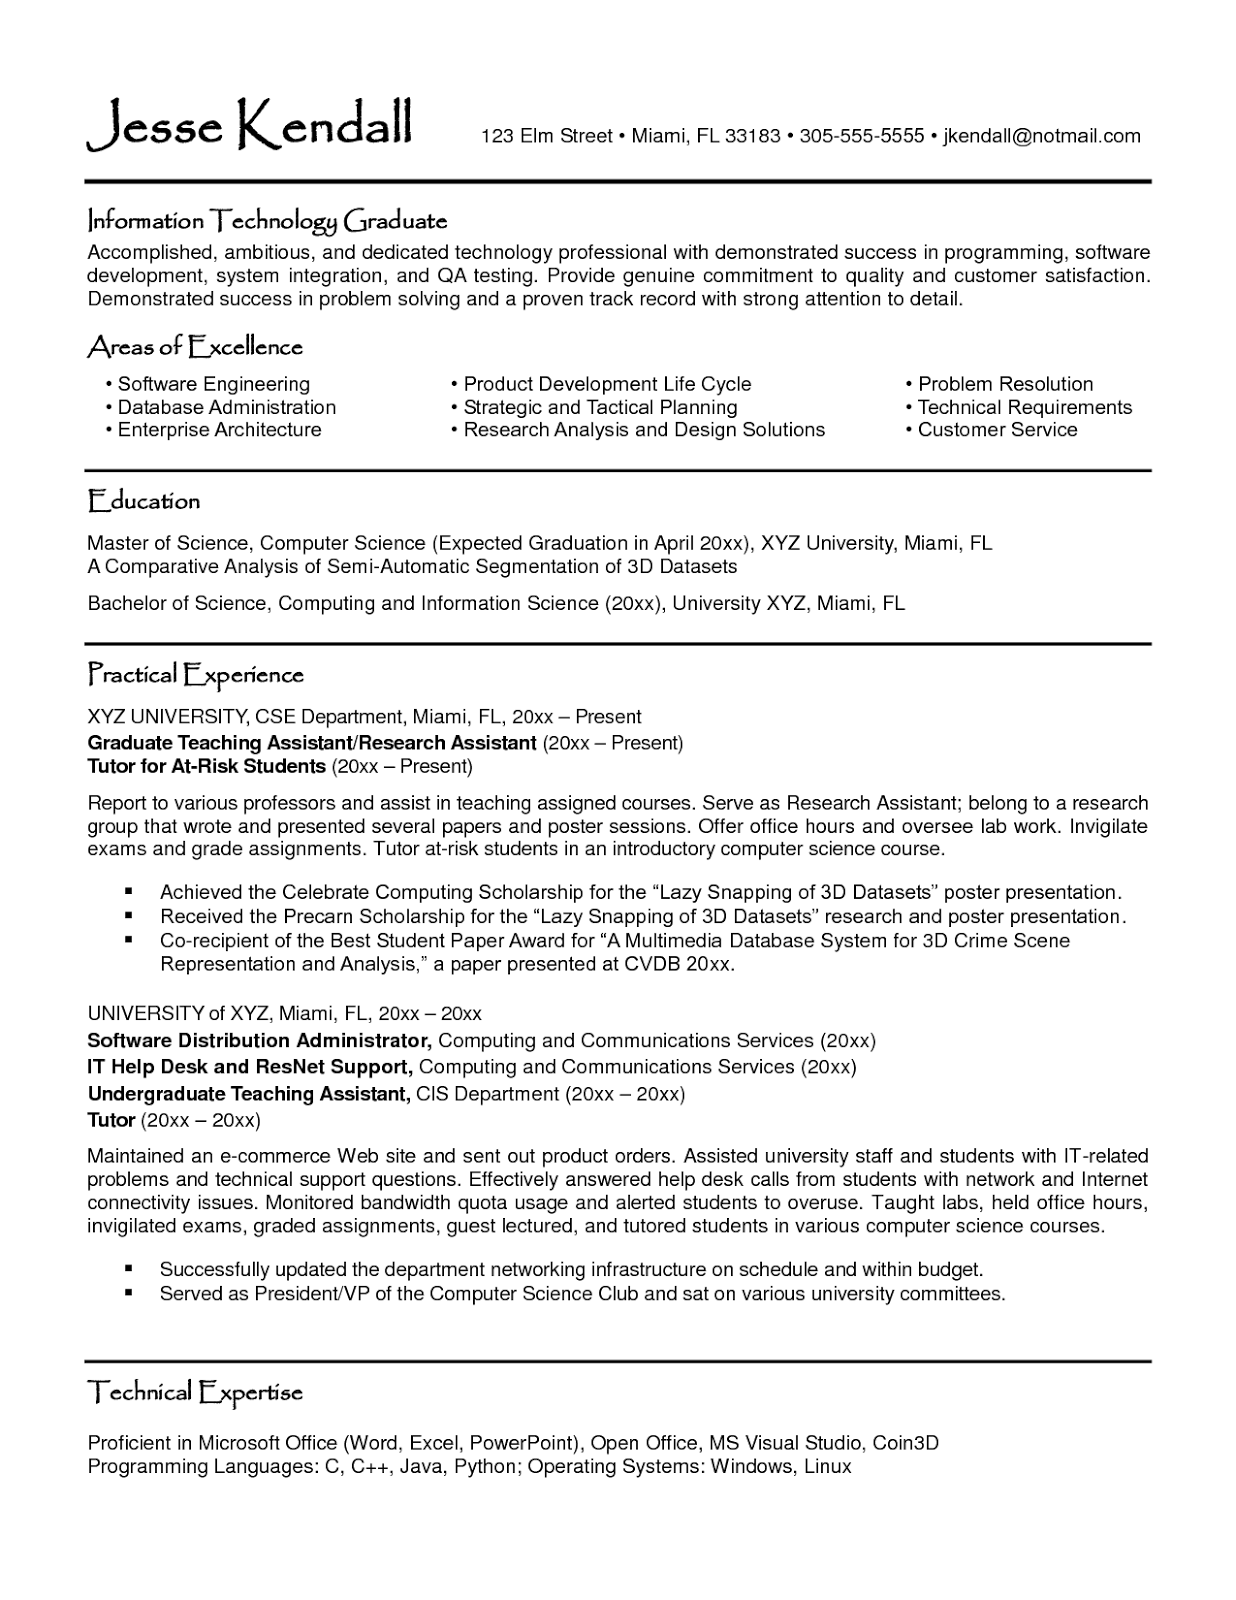 Sample legal resume templates